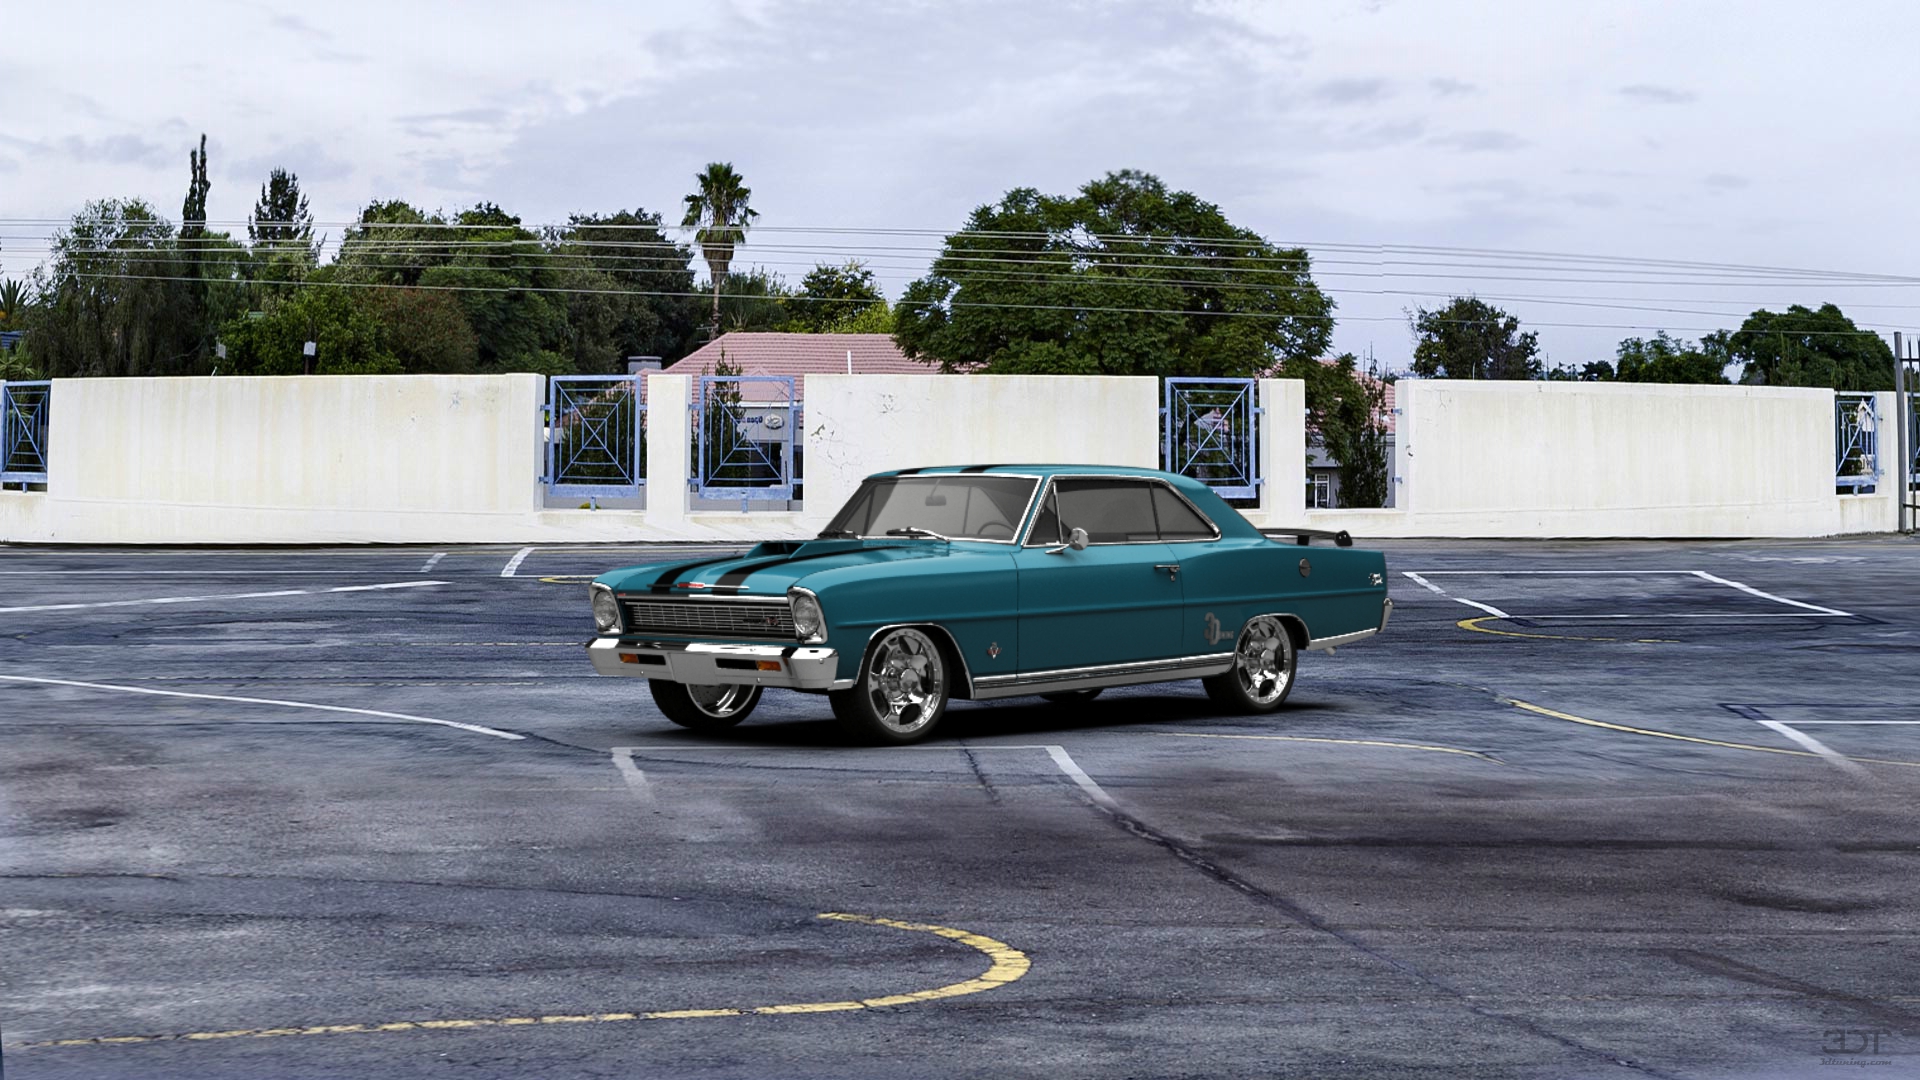 Chevrolet Nova SS Coupe 1966